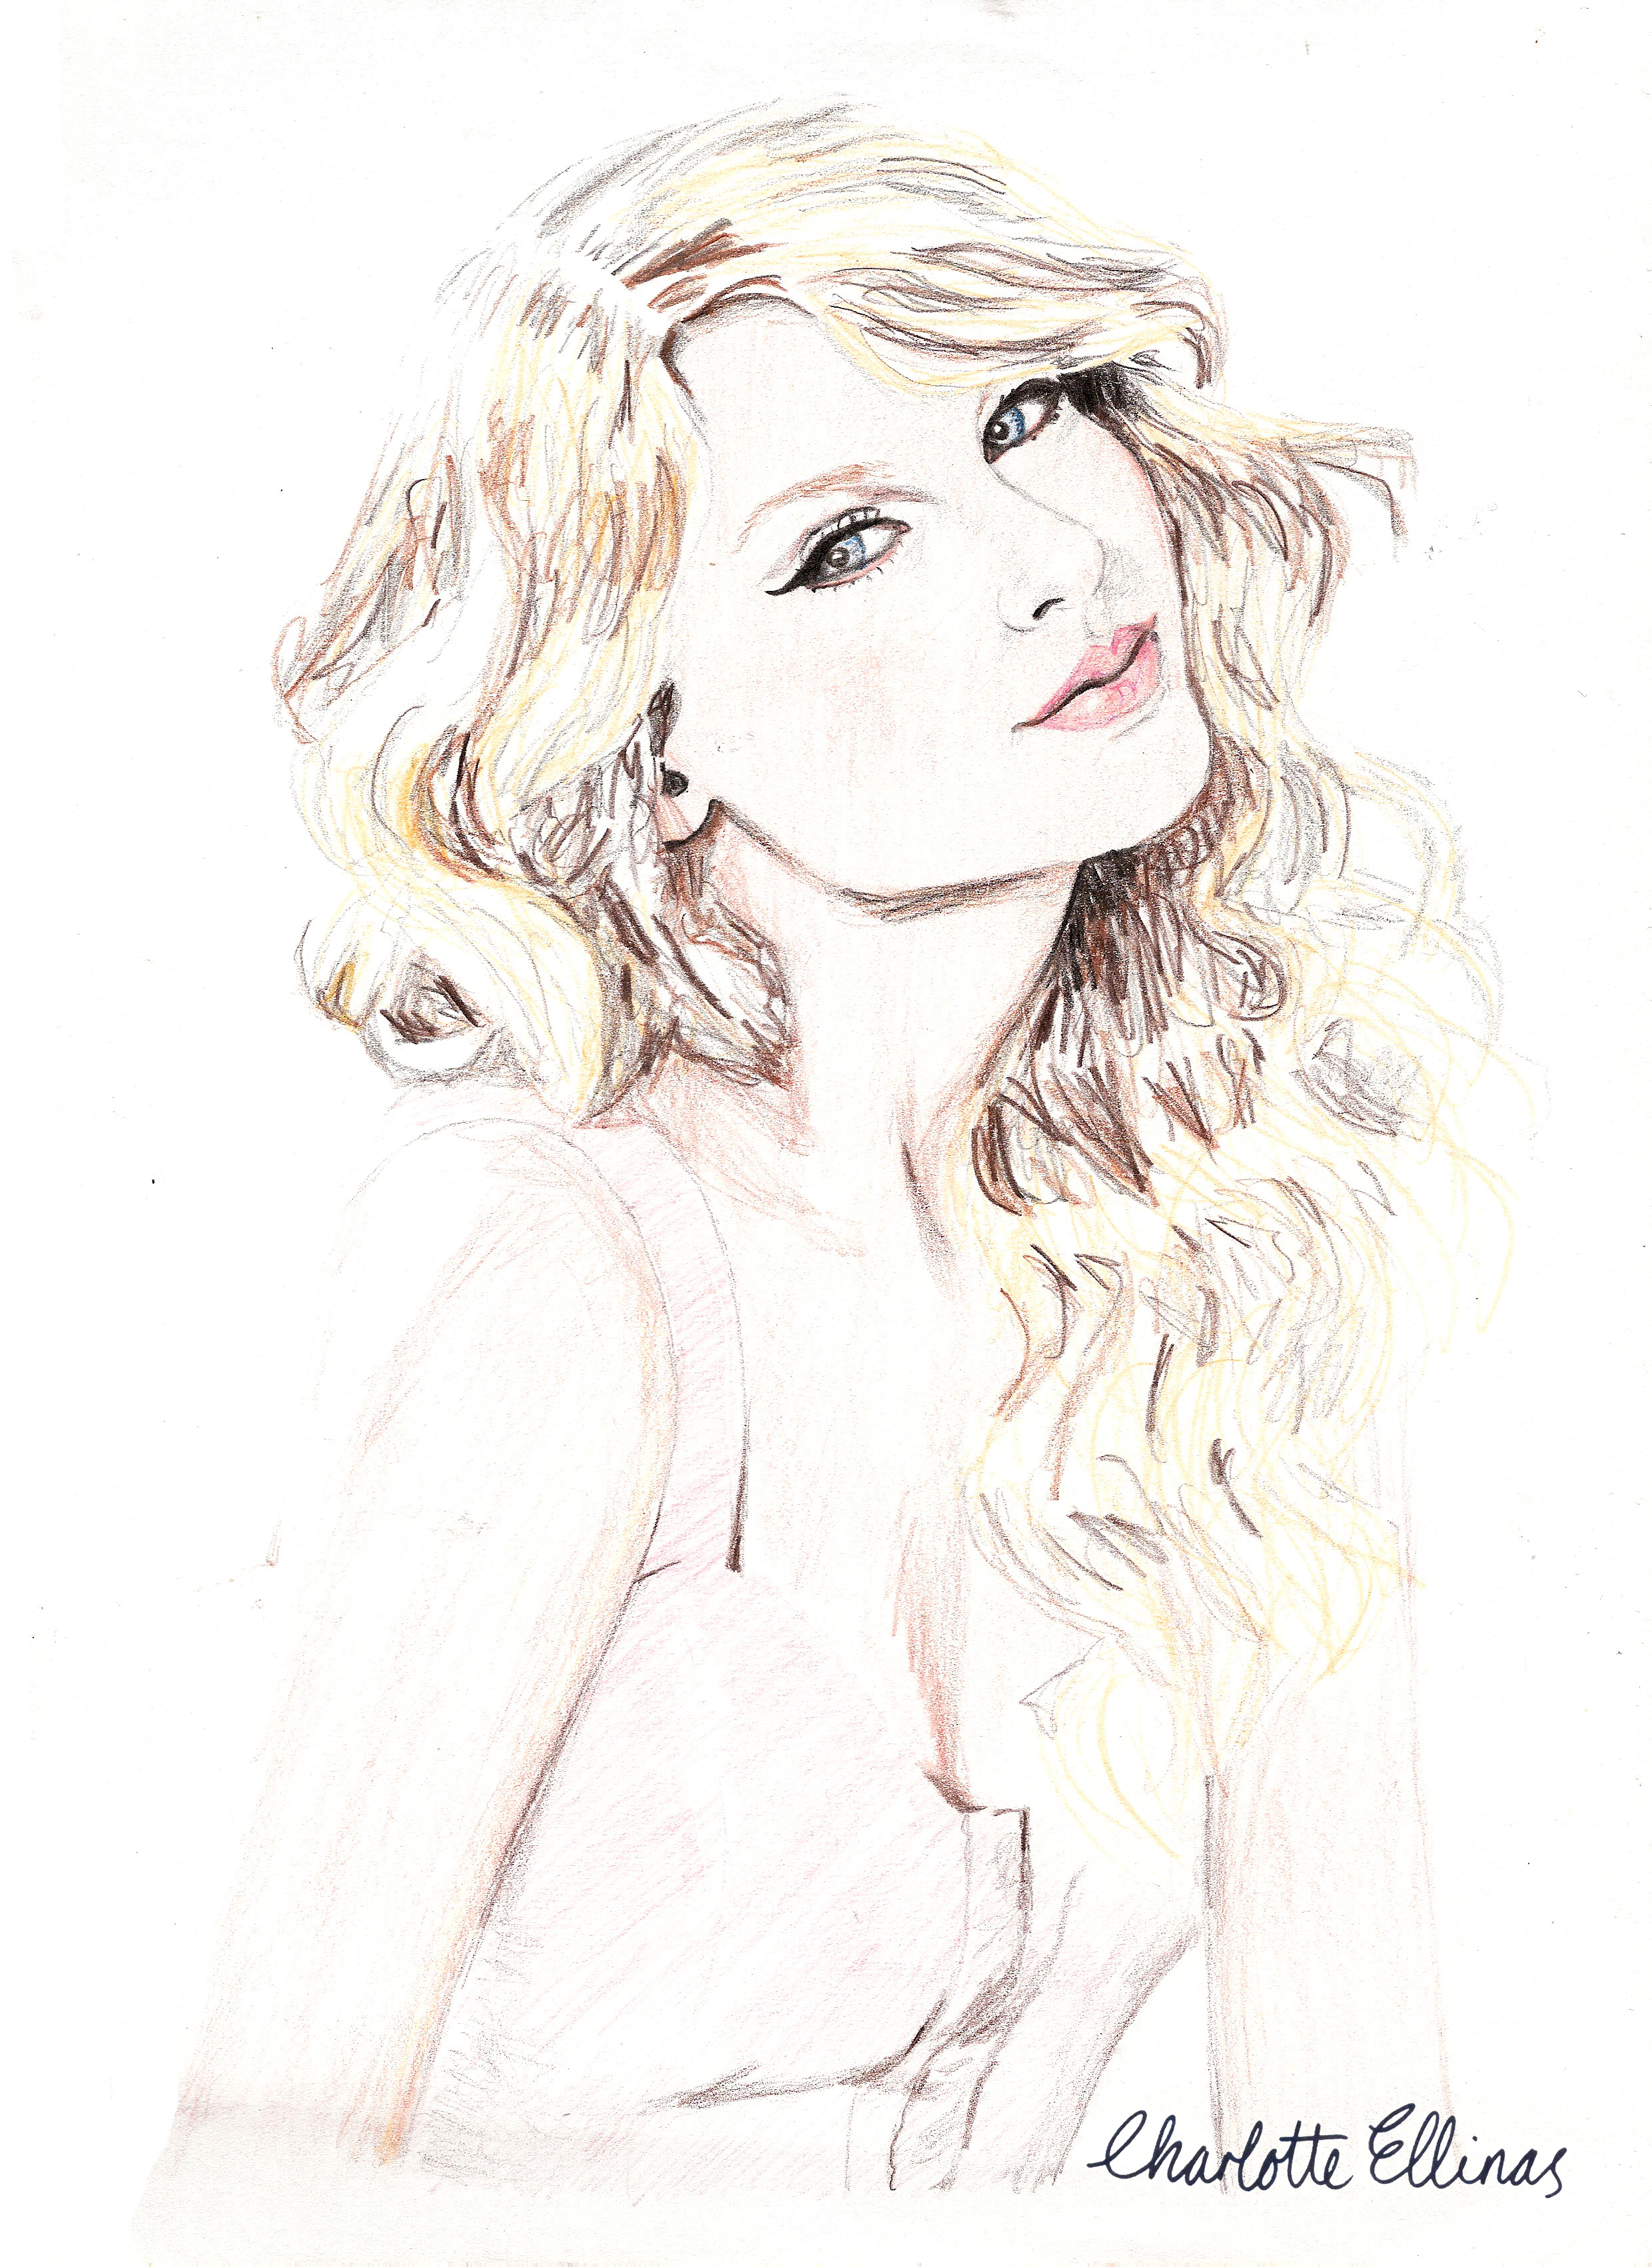 Taylor Swift - Speak Now Era